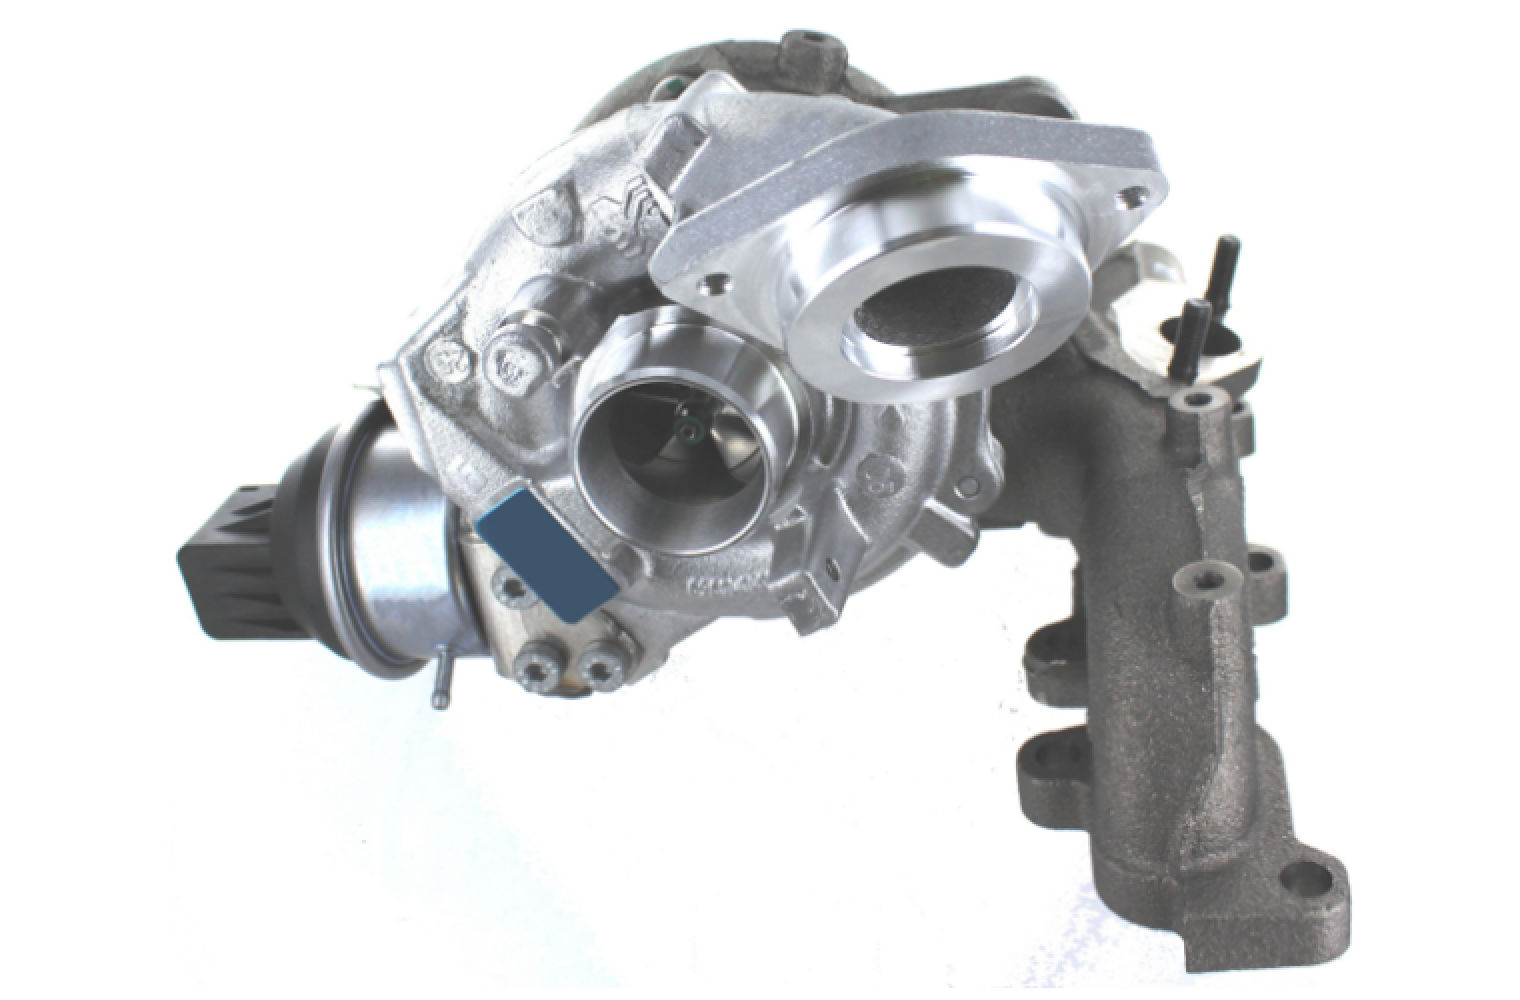 BTN Turbo adds more remanufactured turbos to range - Garagewire